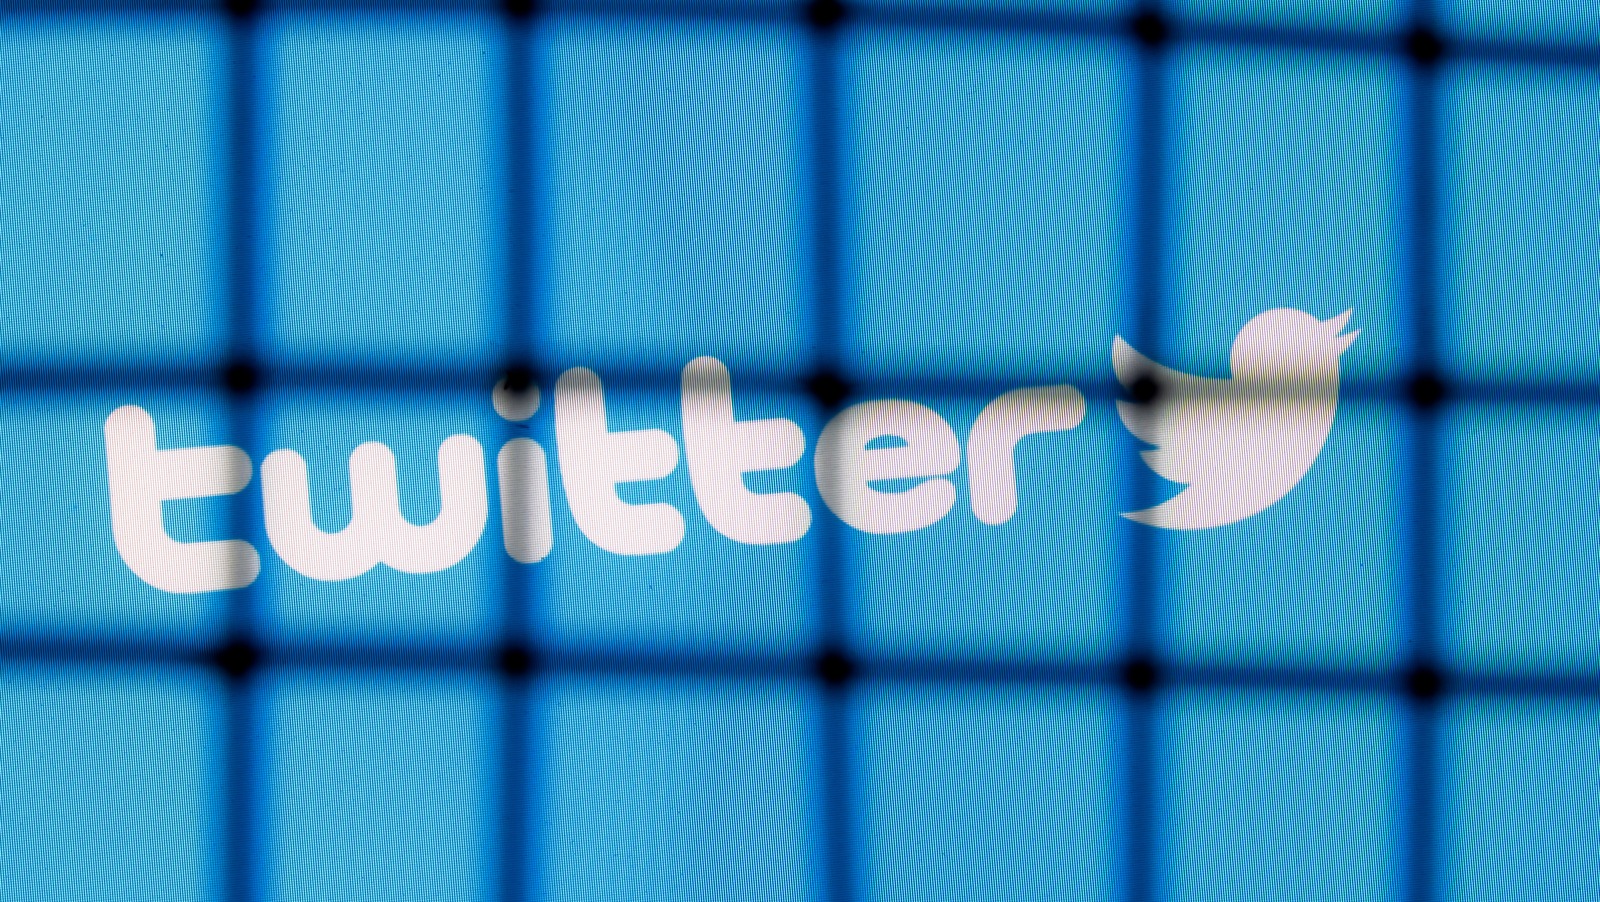 9-celebrities-quitting-twitter-for-good-after-elon-musk-s-twitter-takeover-slashgear